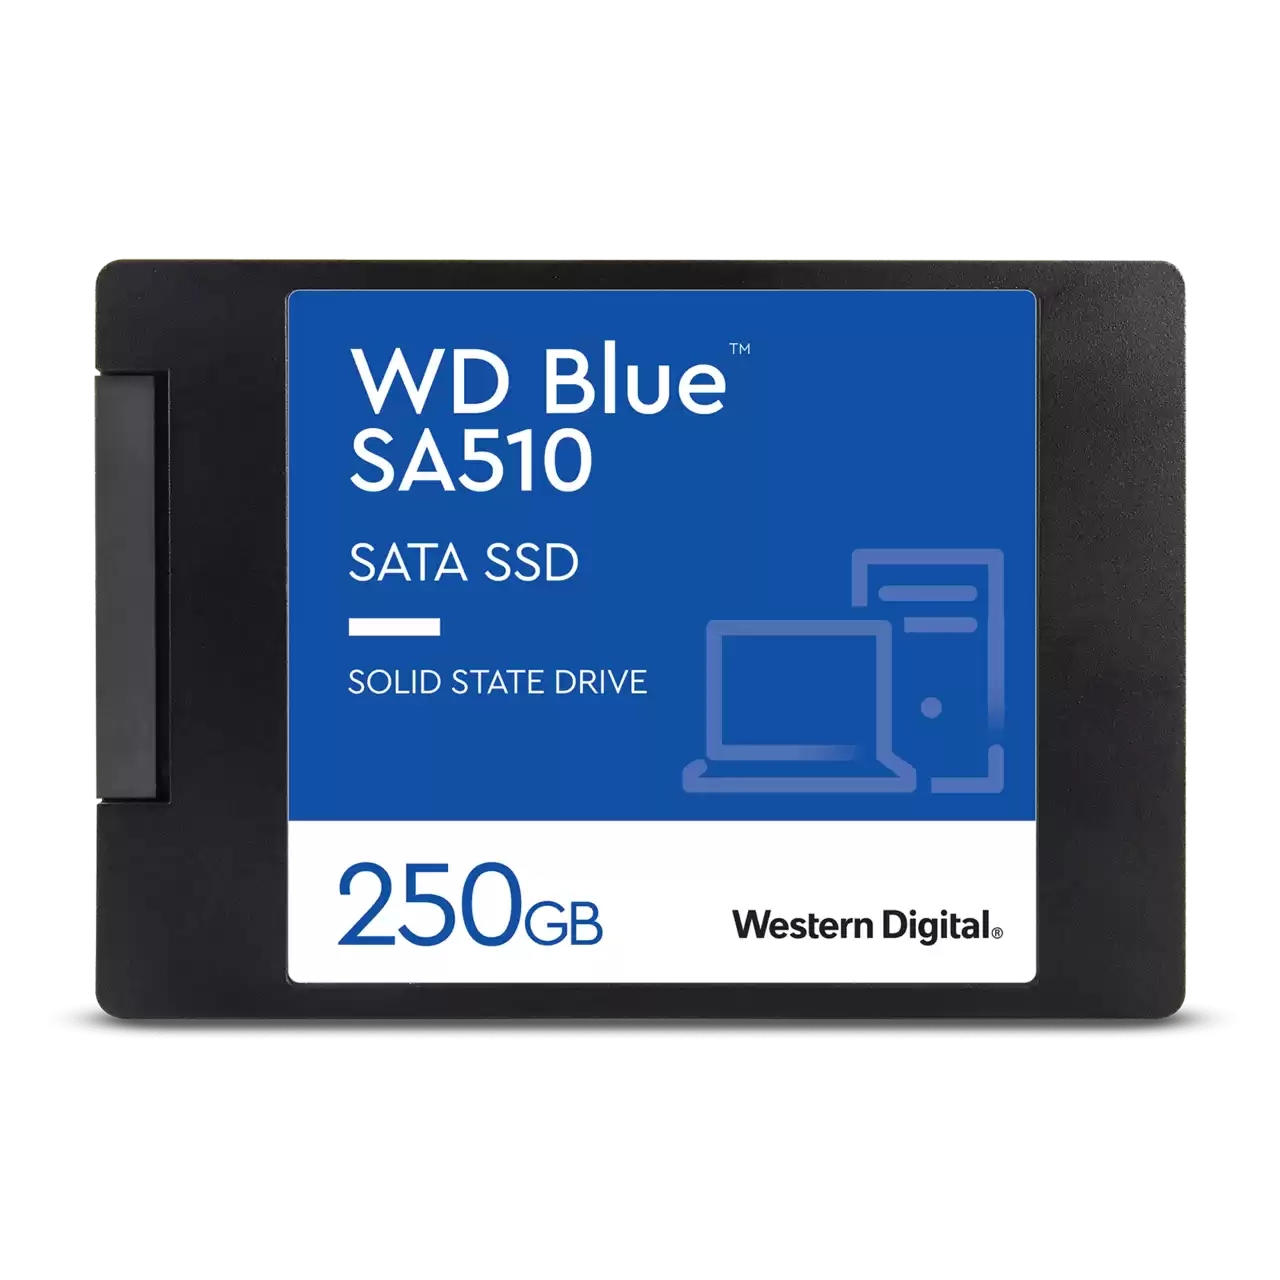 WD Blue SA510 250GB SSD